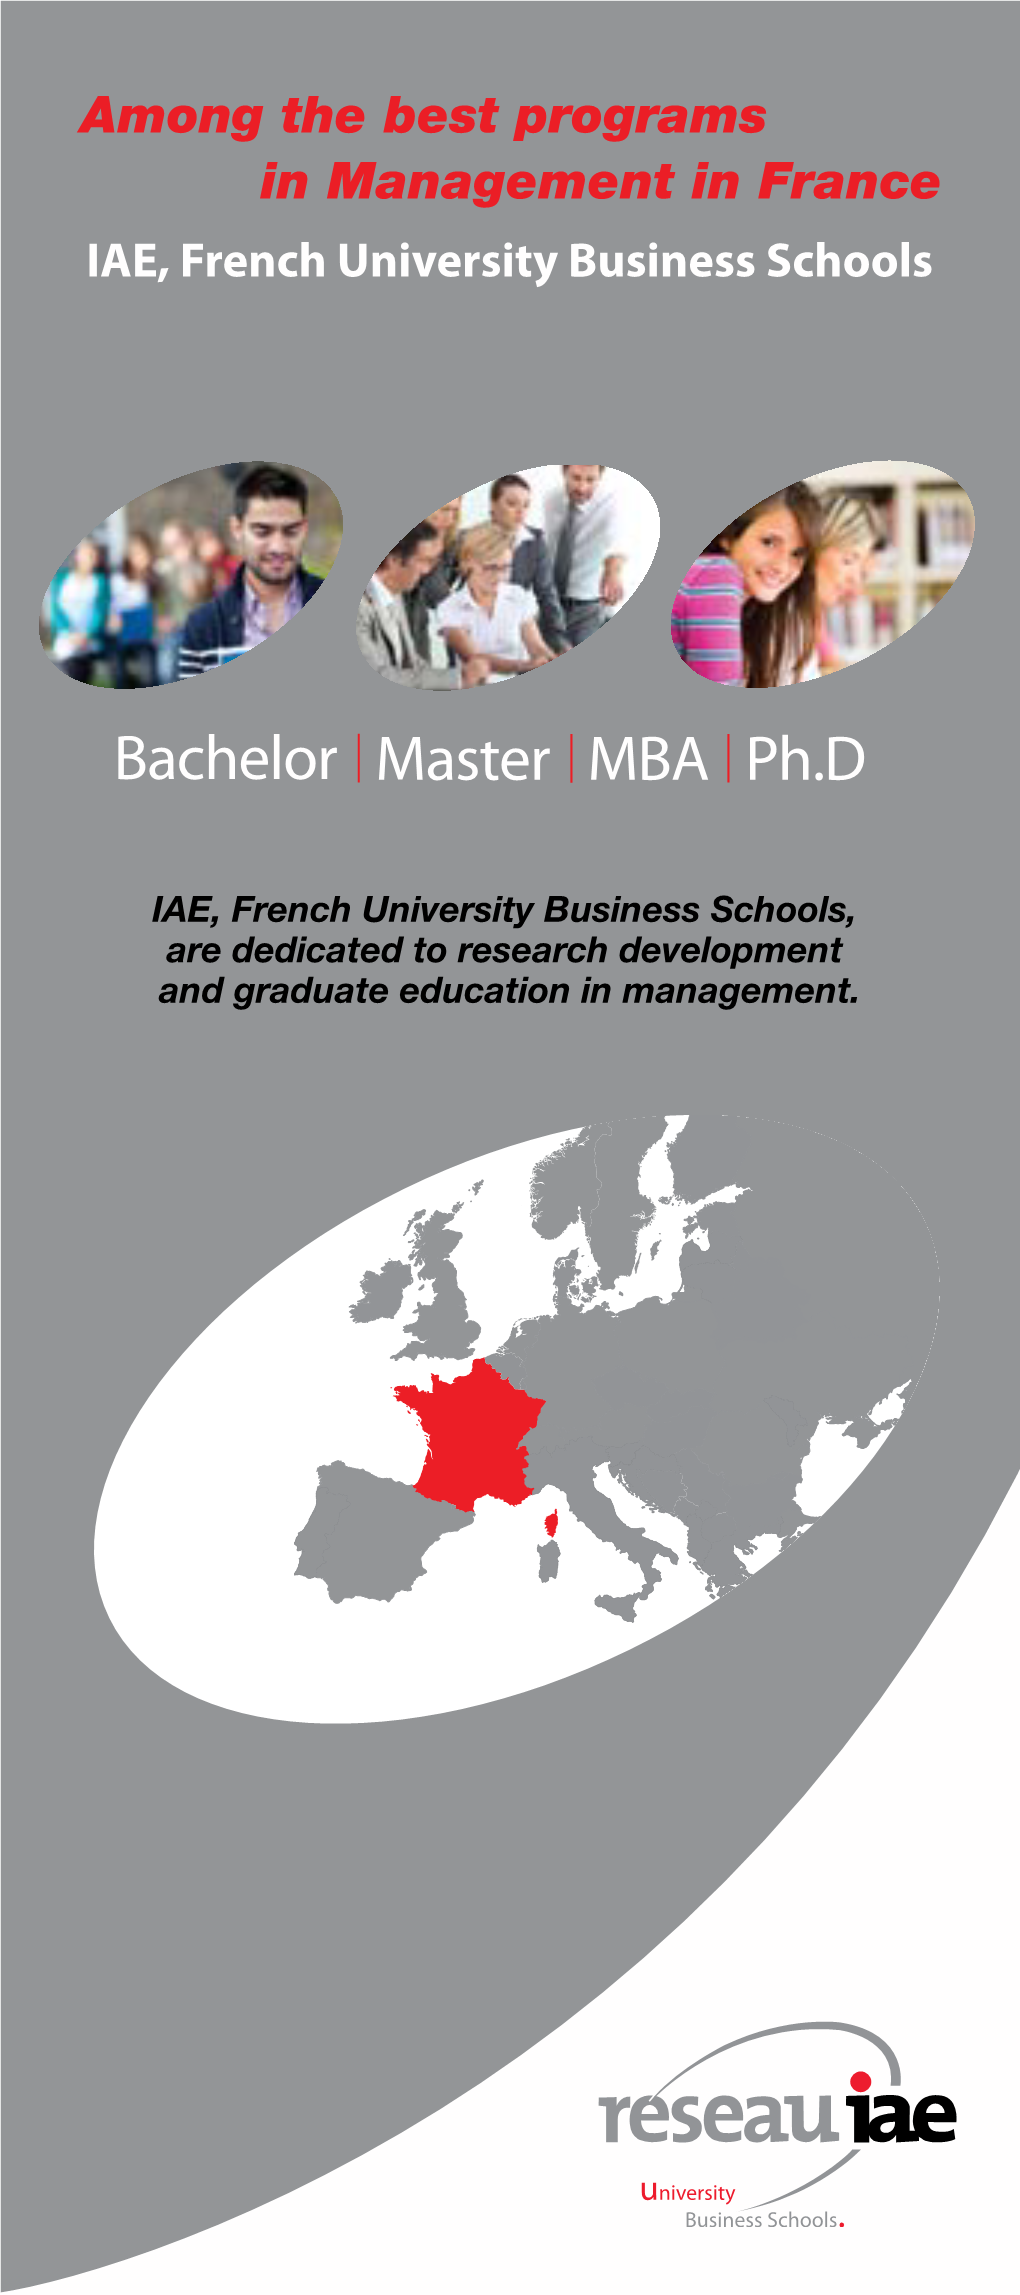 Bachelor Master MBA Ph.D